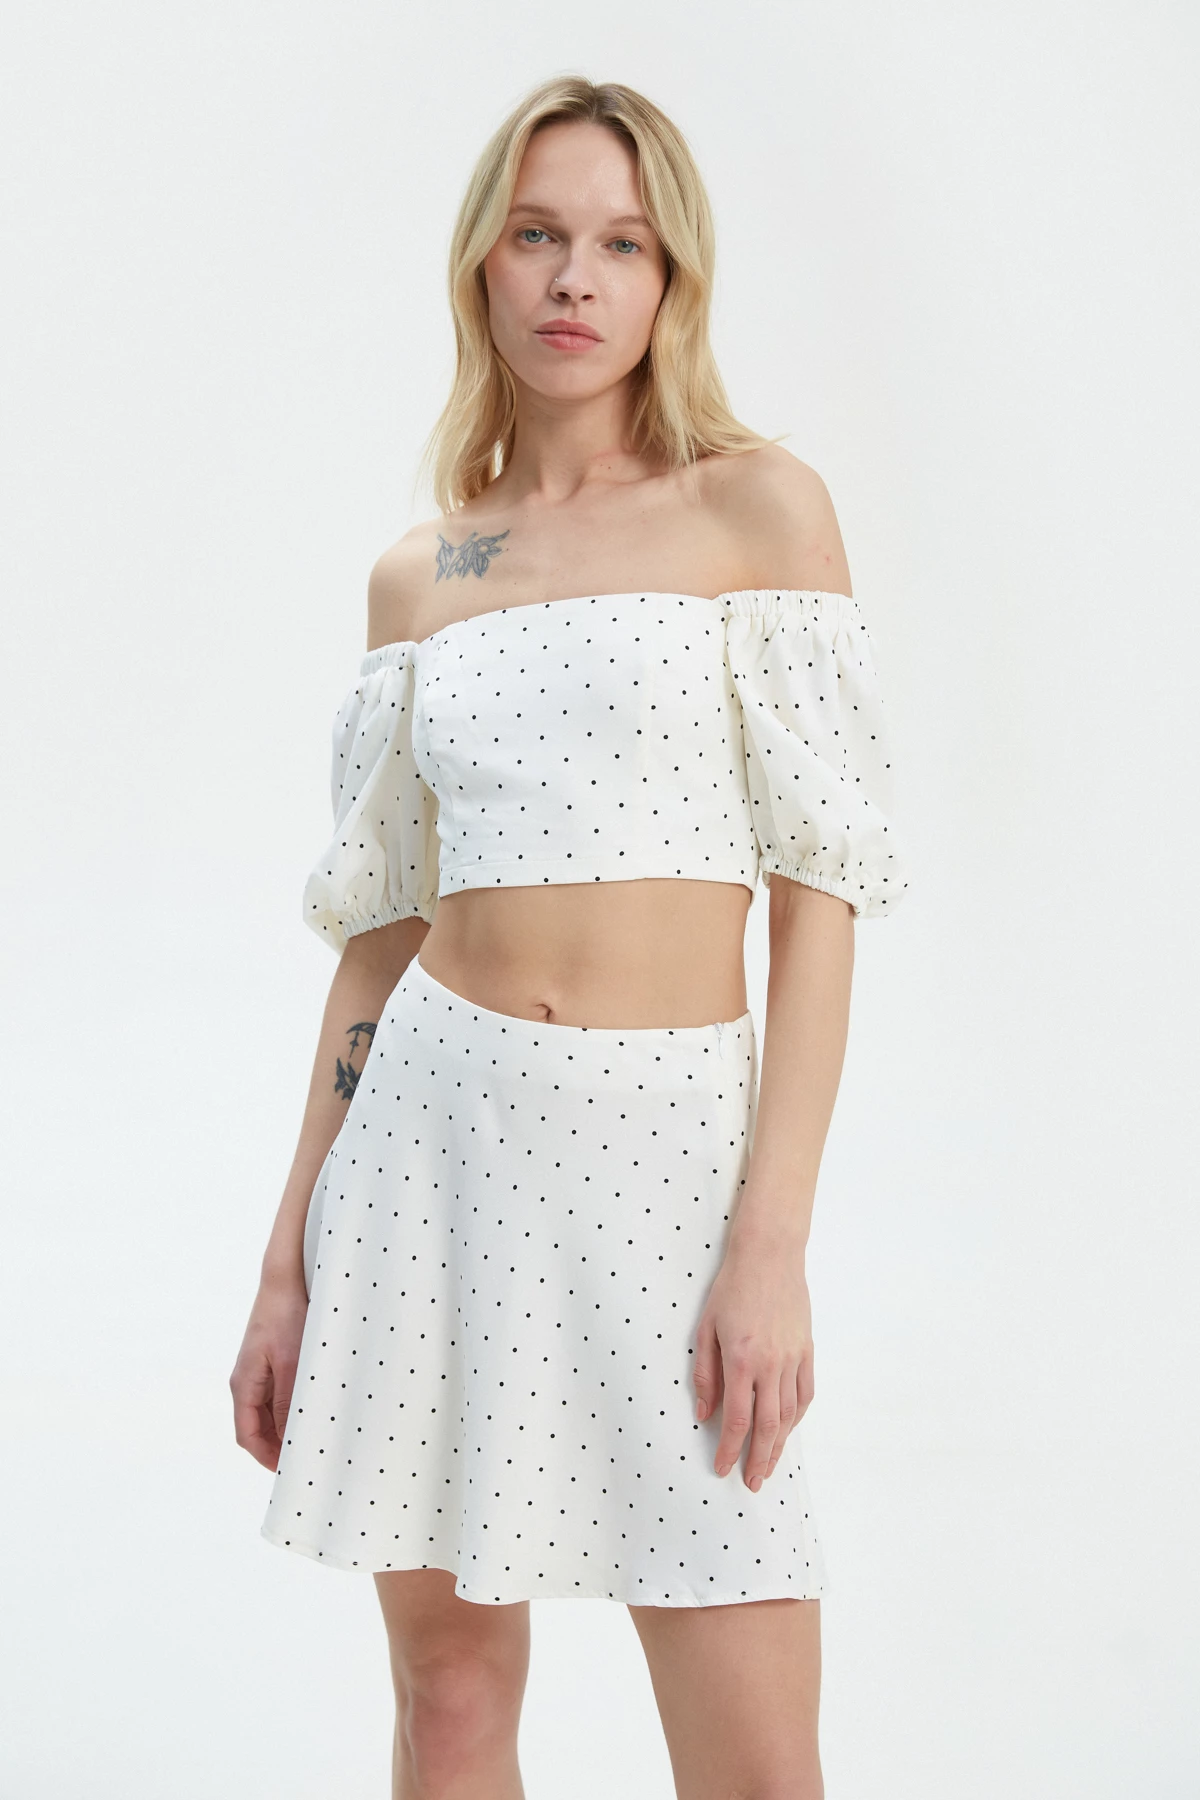 Milky viscose short skirt with polka dot print, photo 3